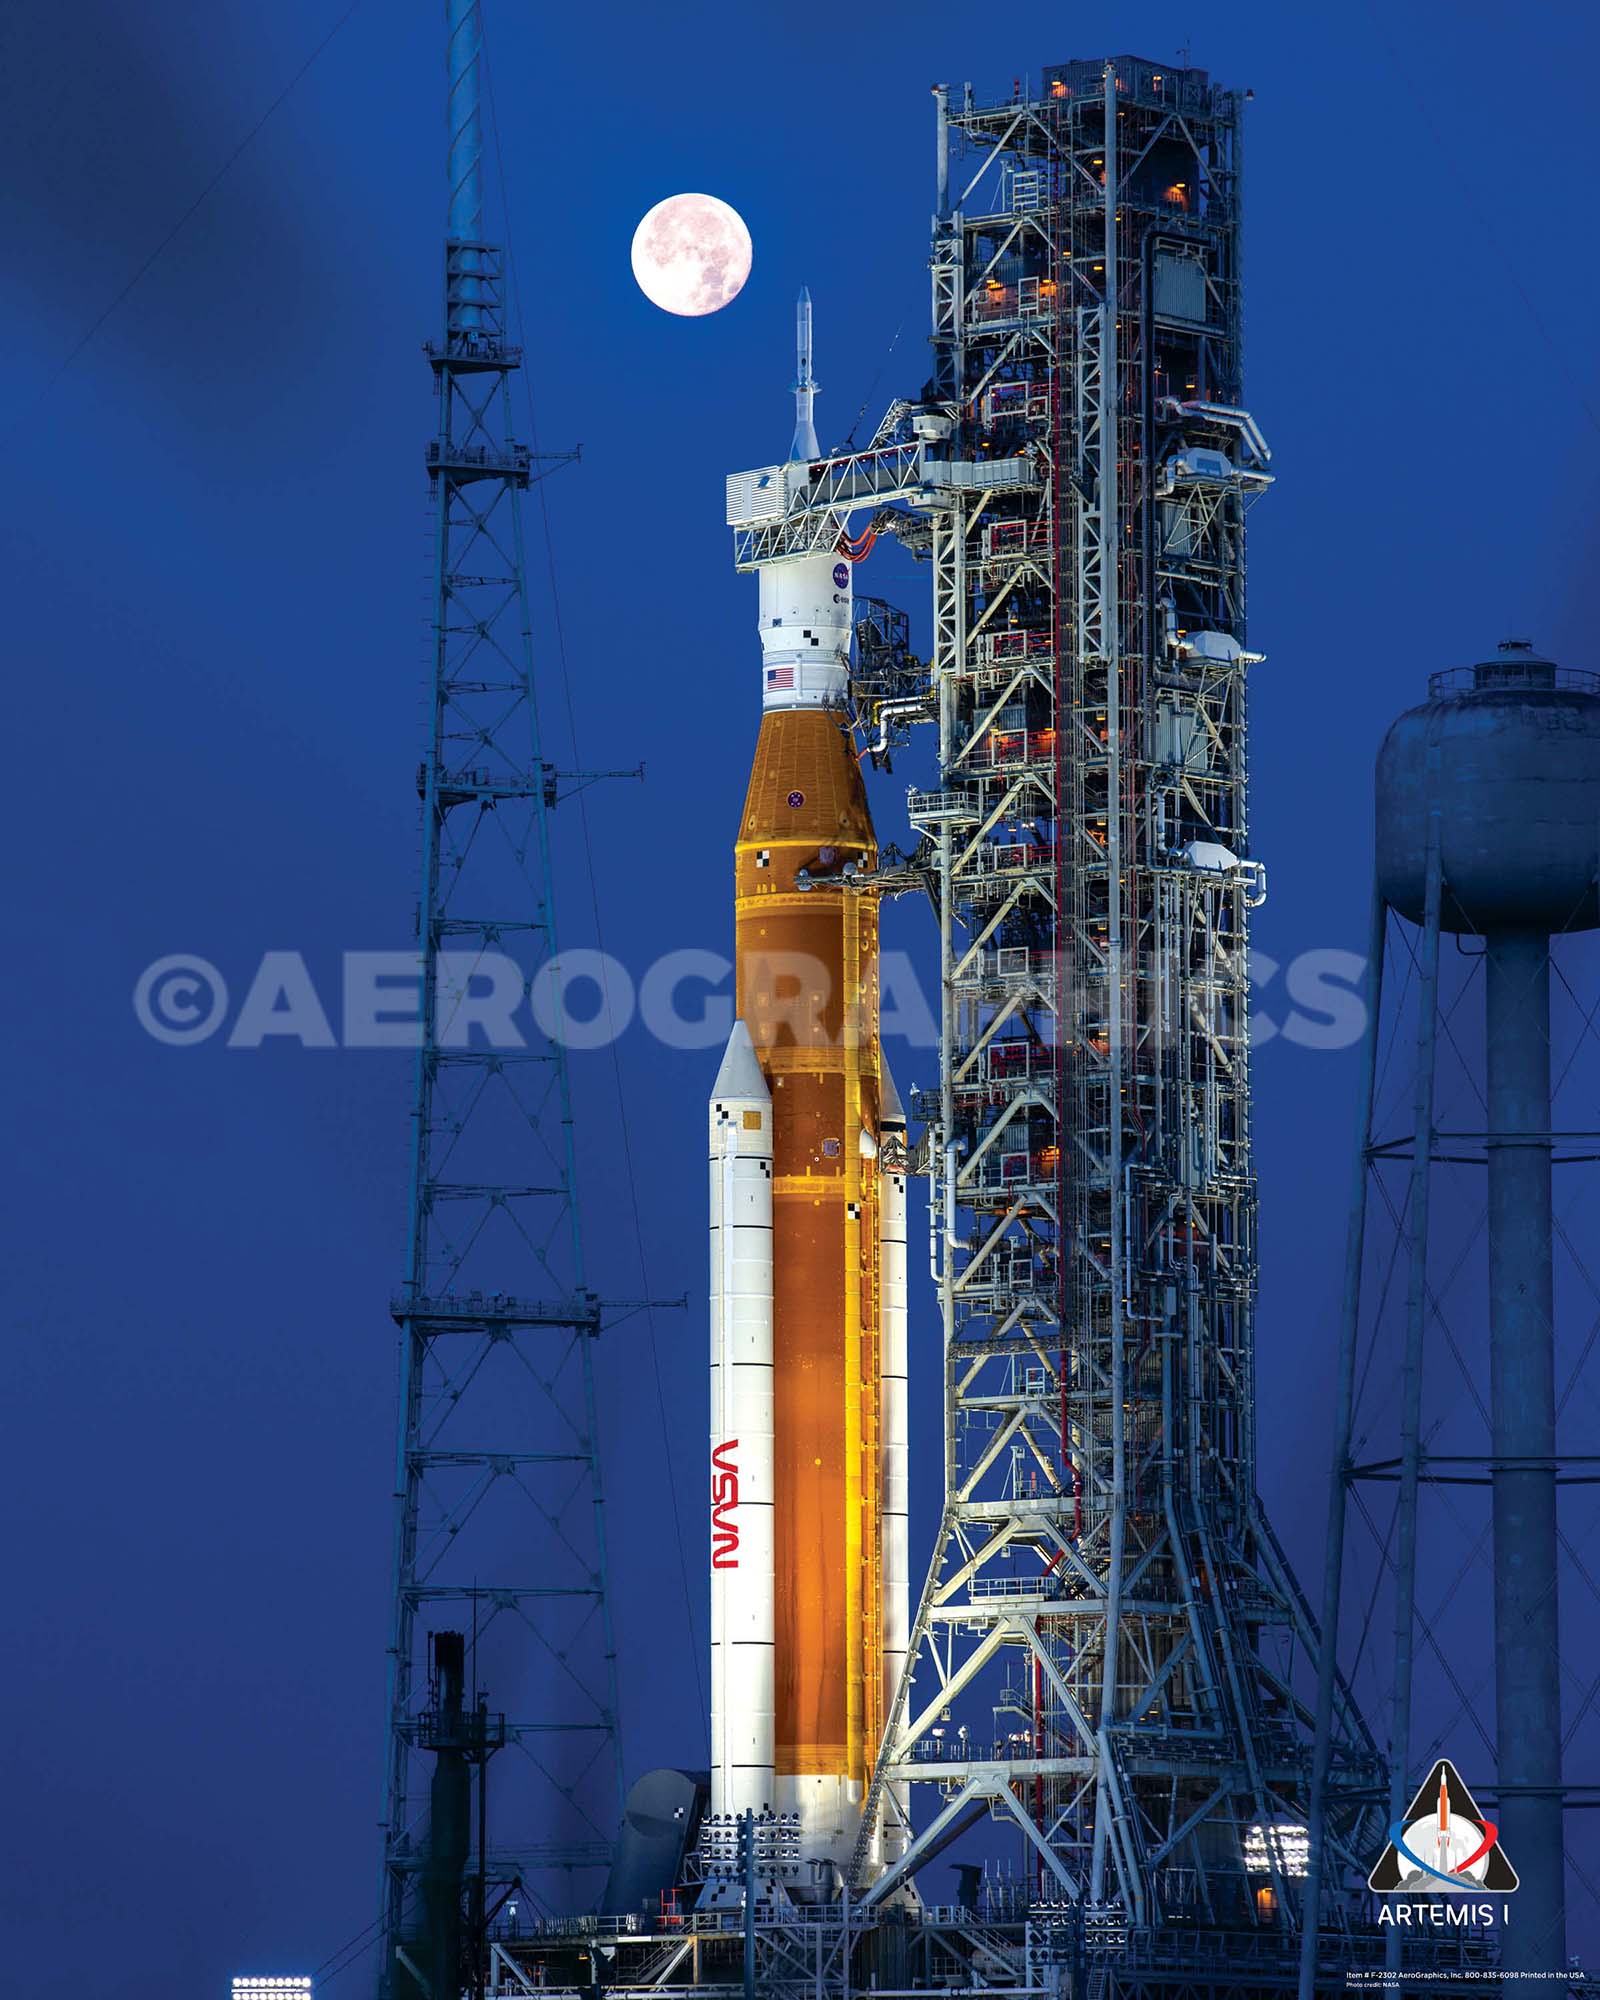 Artemis 1 on pad with moon